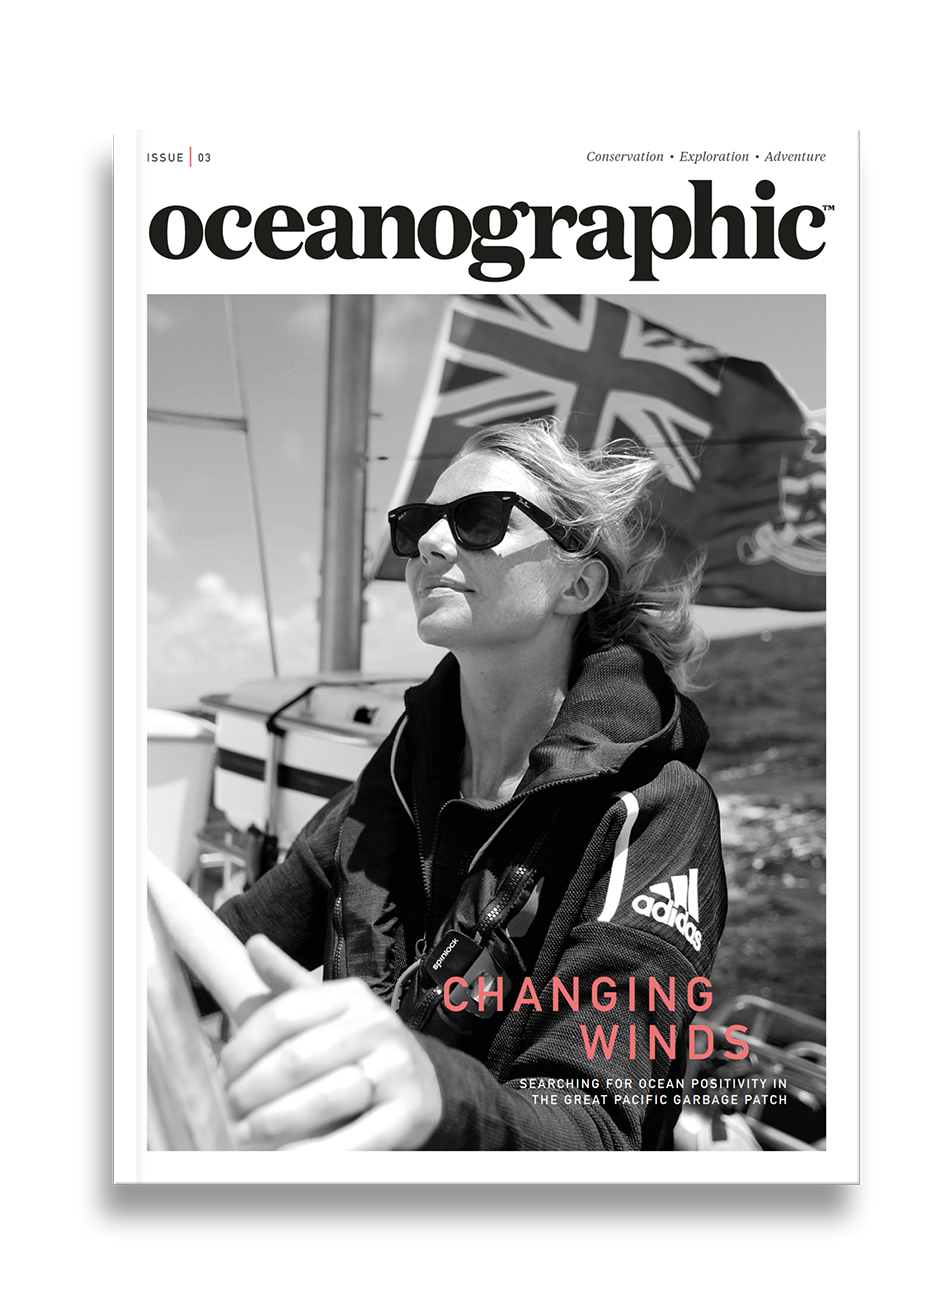 Oceanographic Magazine, Issue 03, Chasing winds